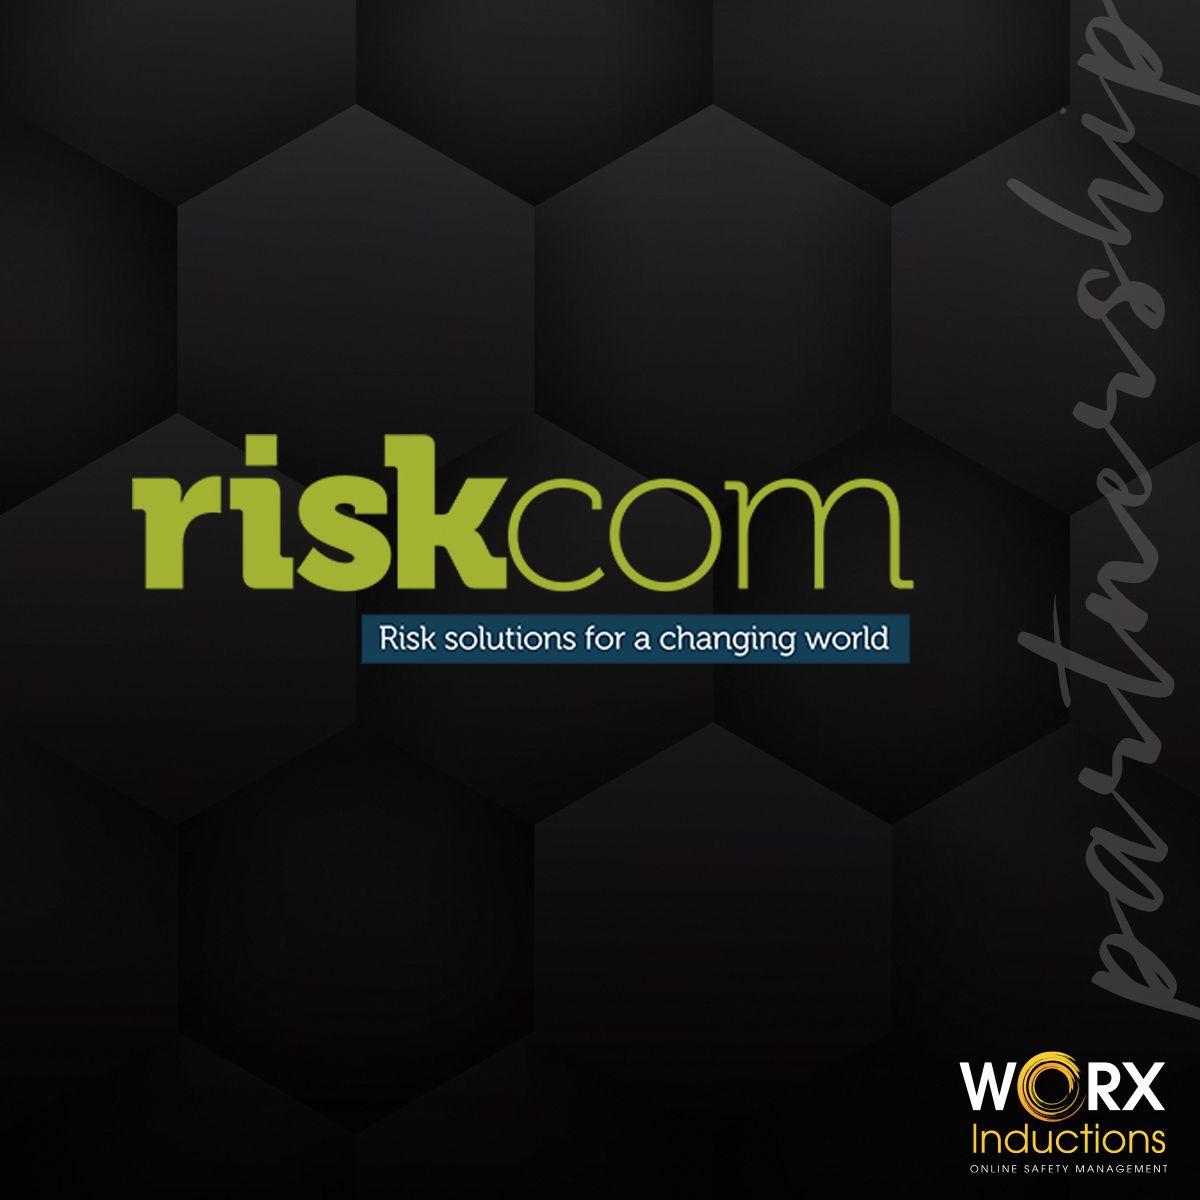 Worx Partners up with Riskcom